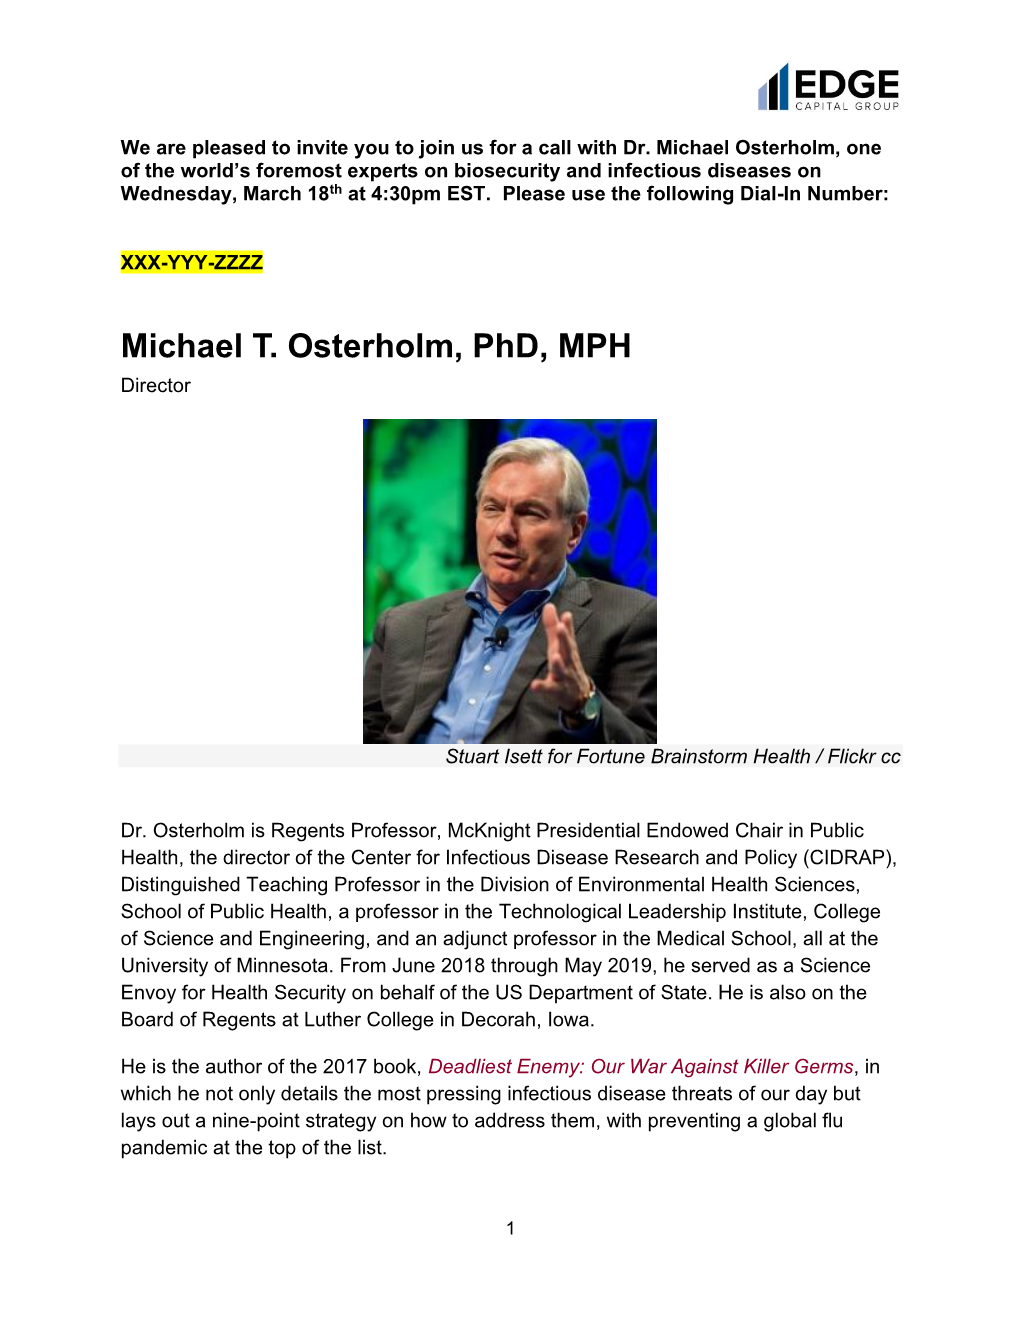 Michael T. Osterholm, Phd, MPH Director